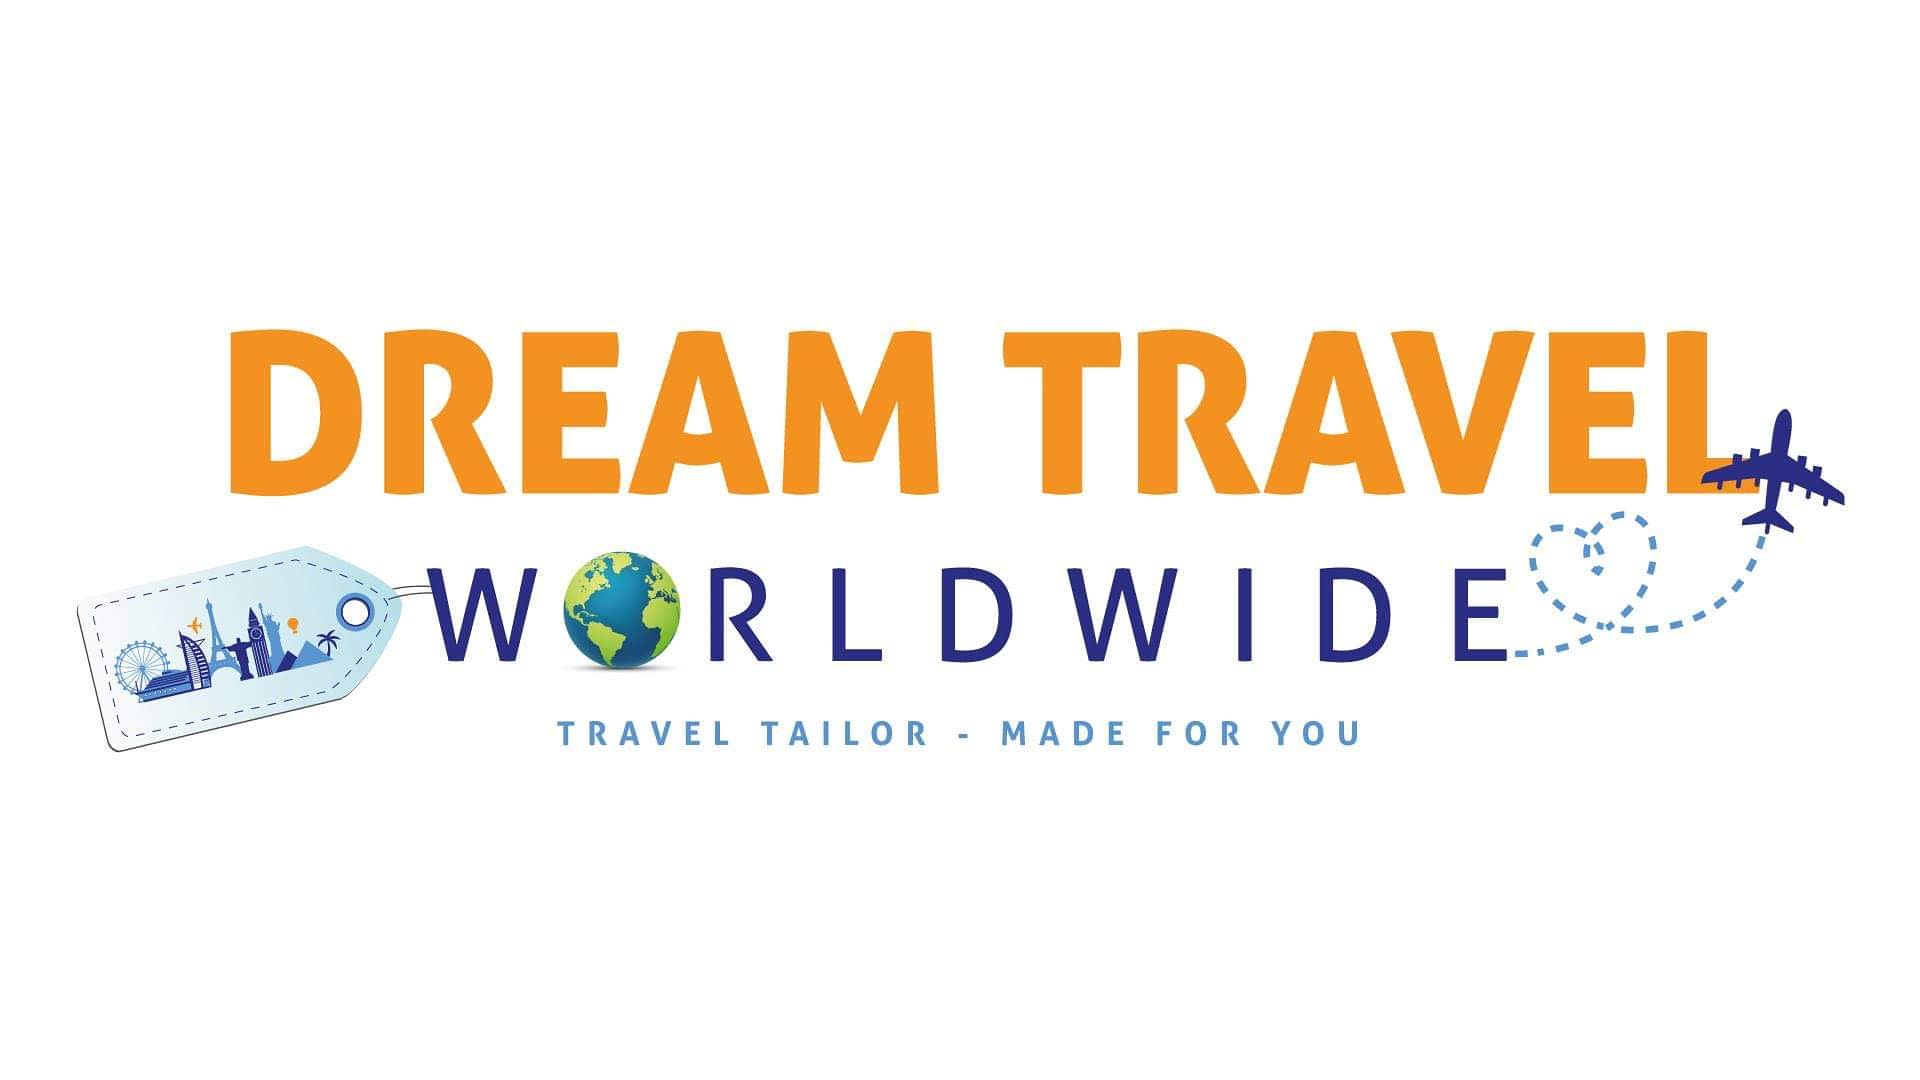 Dream Travel Worldwide